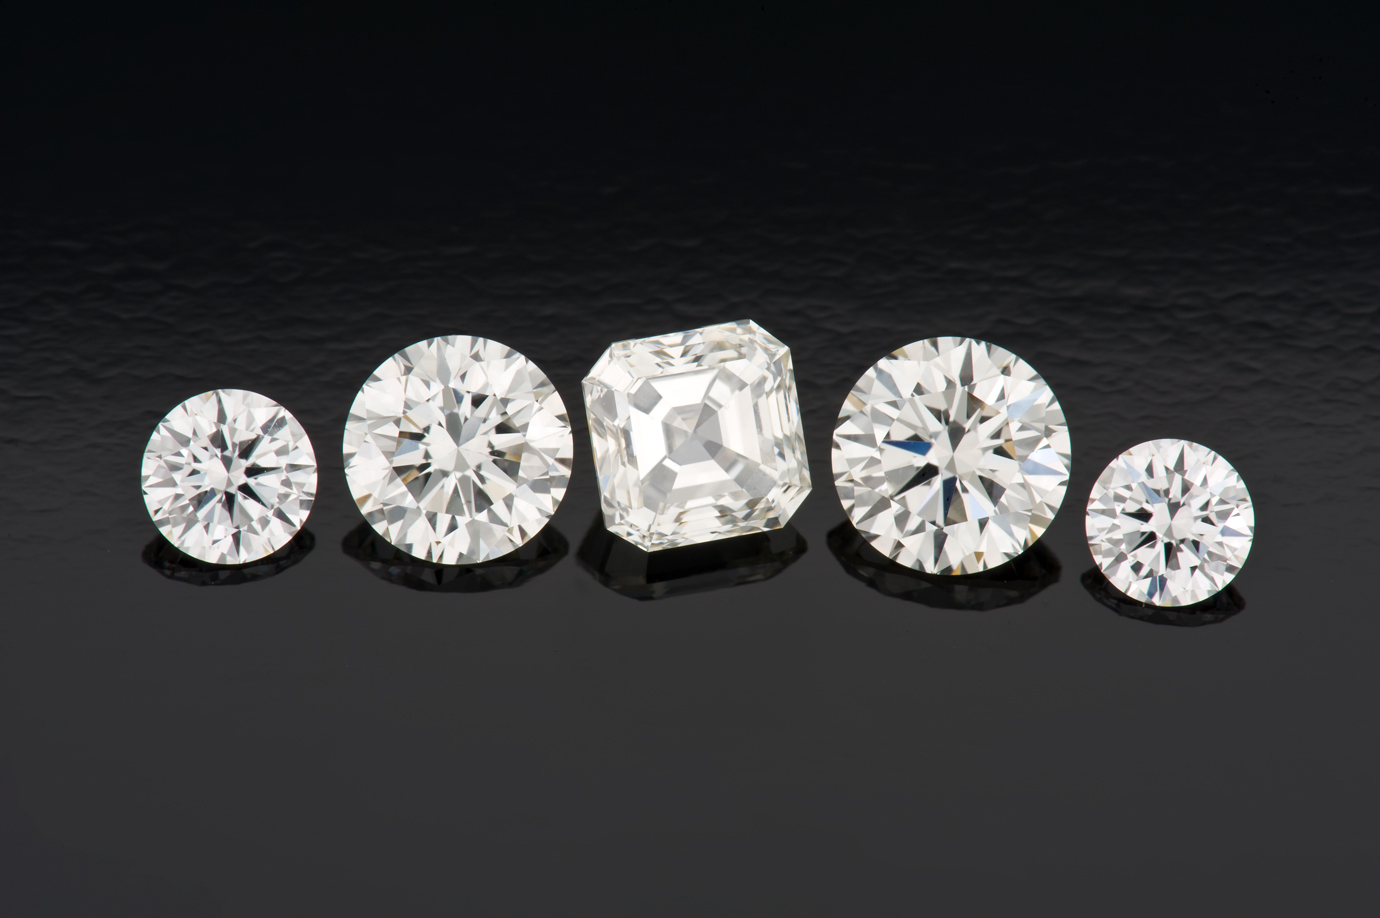 The science behind lab-grown diamonds